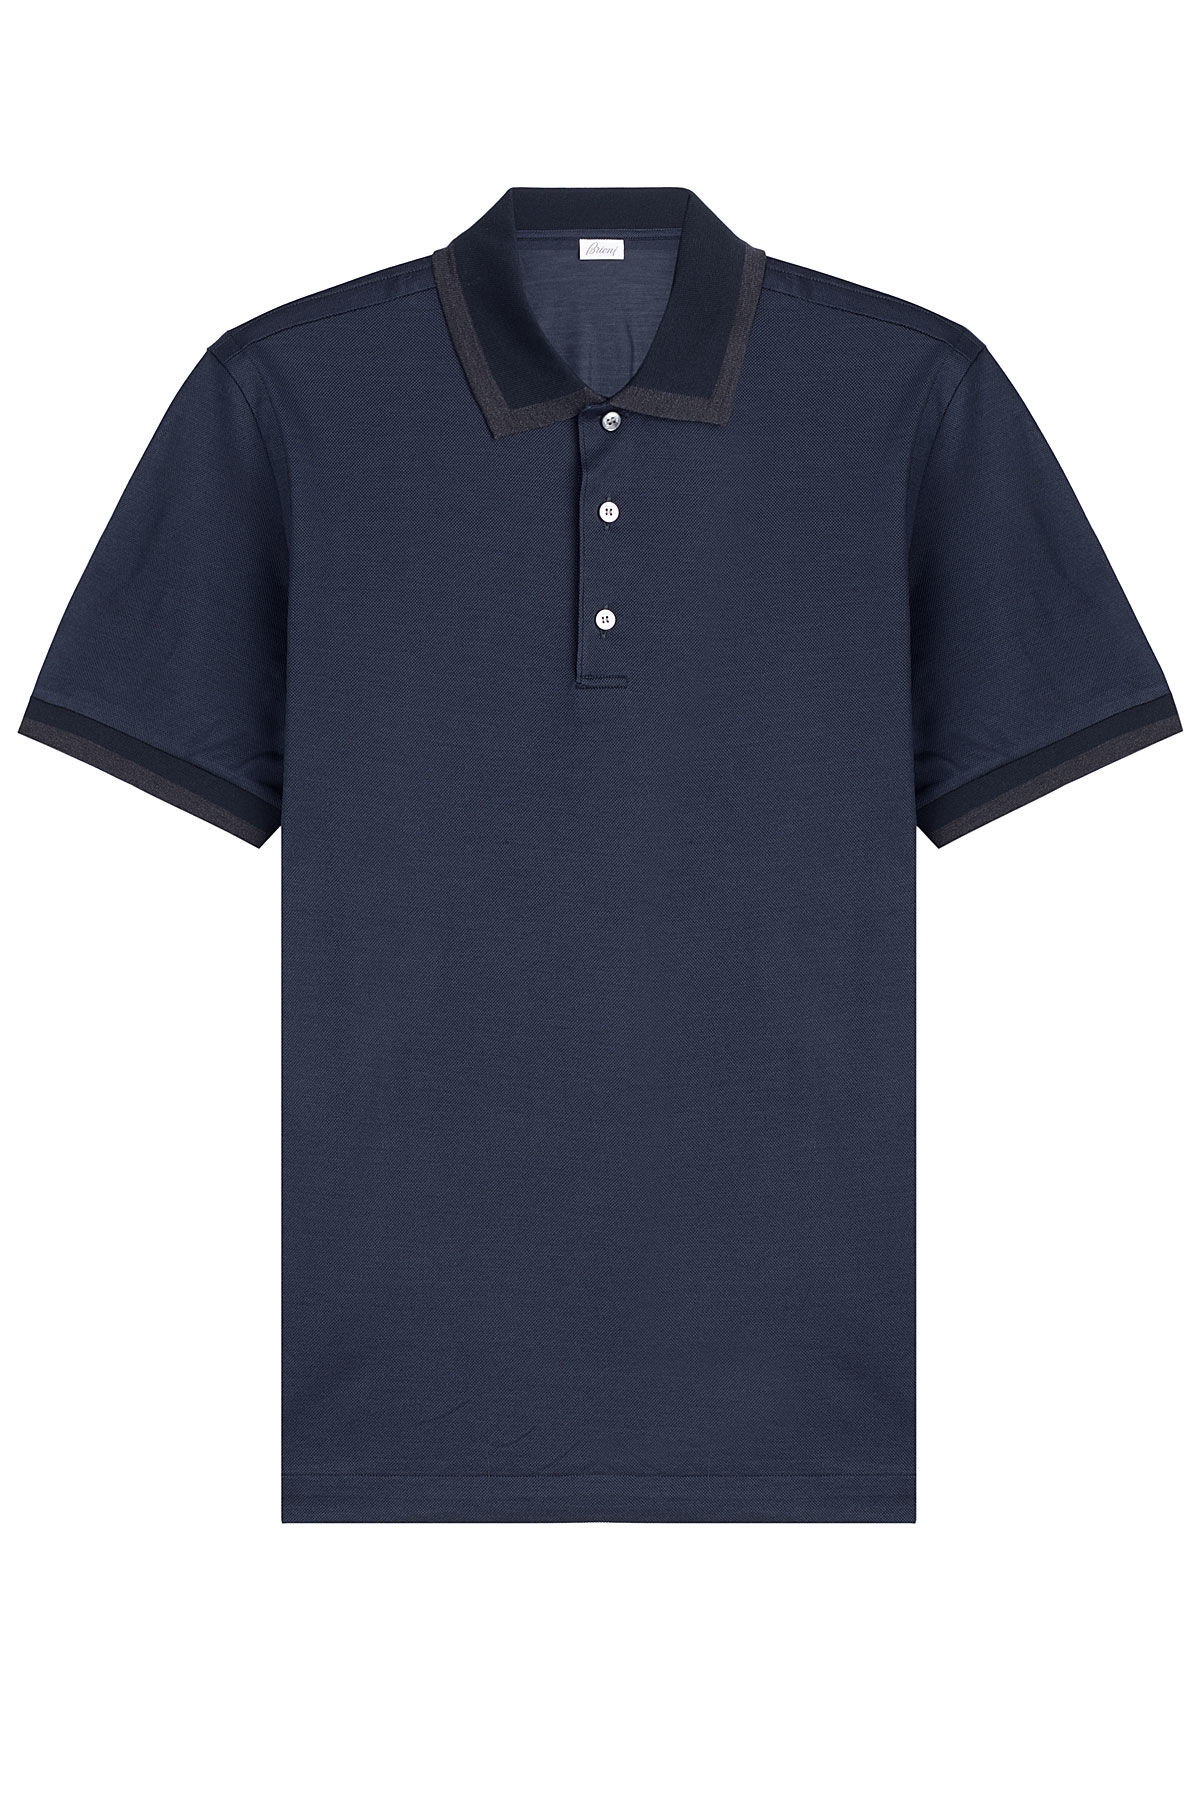 Lyst - Brioni Cotton-silk Polo Shirt - Blue in Blue for Men